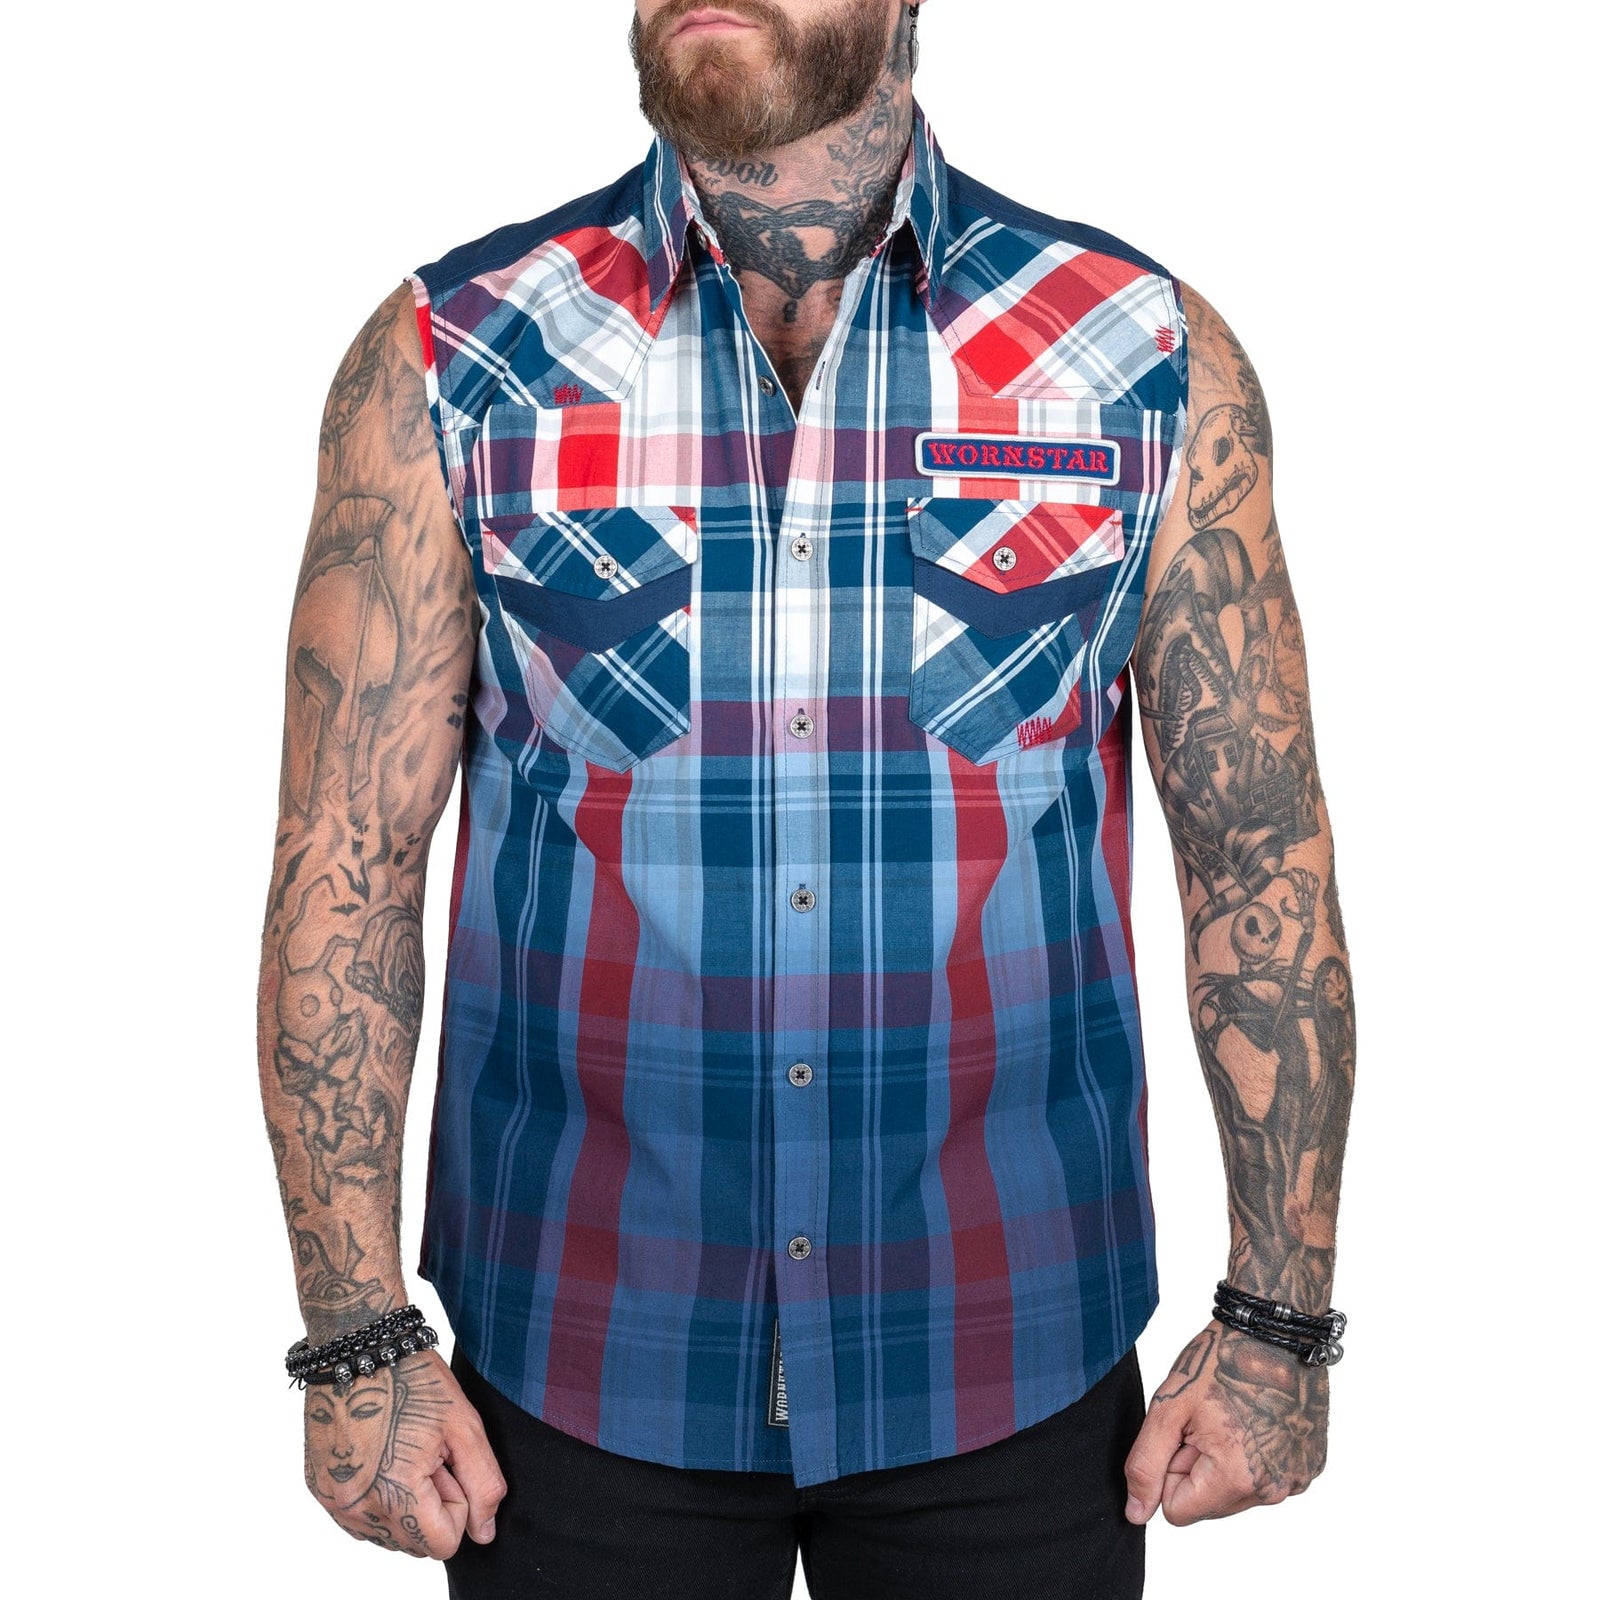 Wornstar Clothing Mens Shirt. Button Down Heritage Shirt - Sleeveless